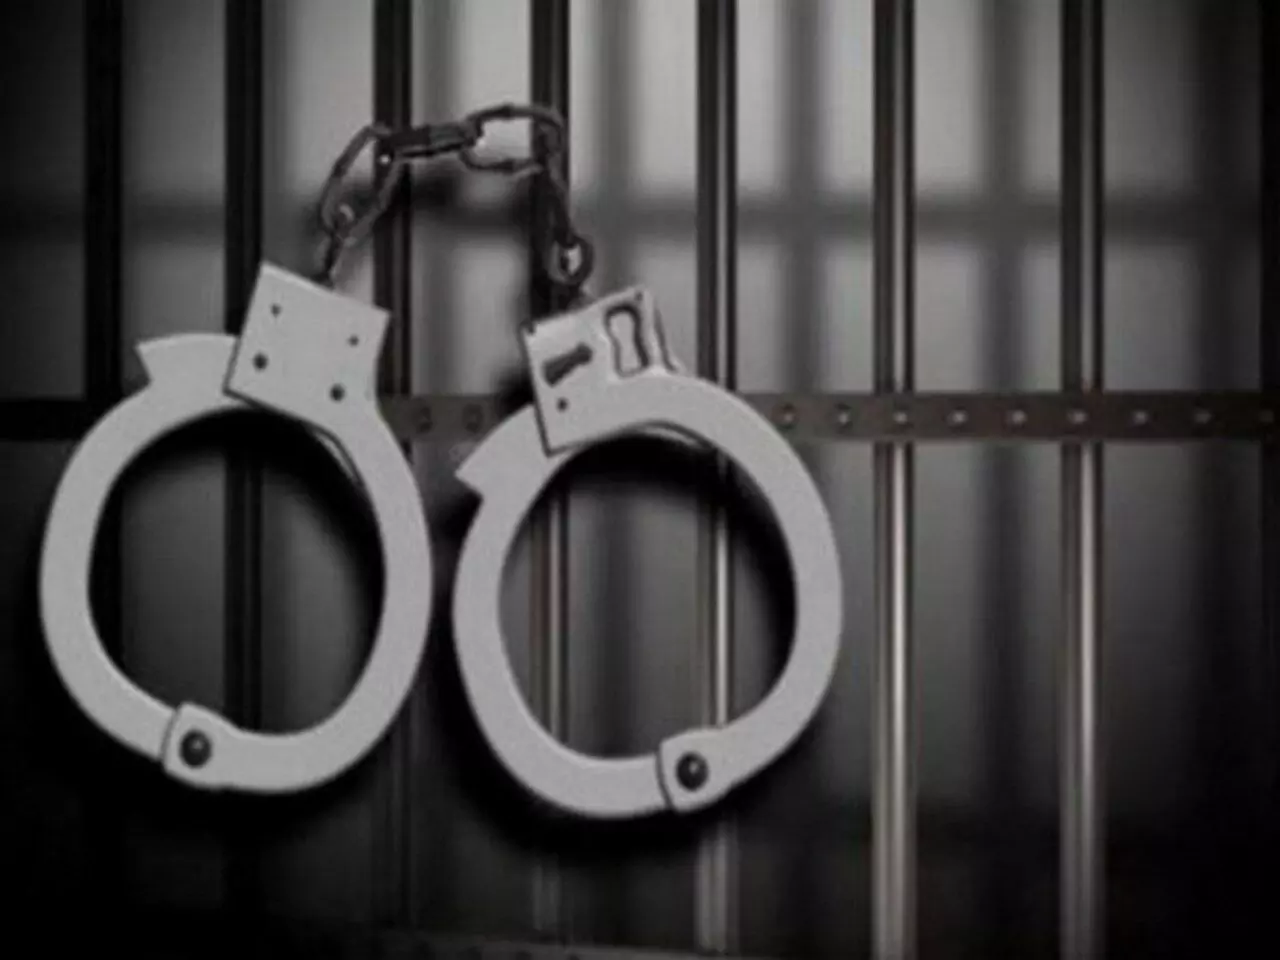 4 jailed for Cybercrimes in Kwara